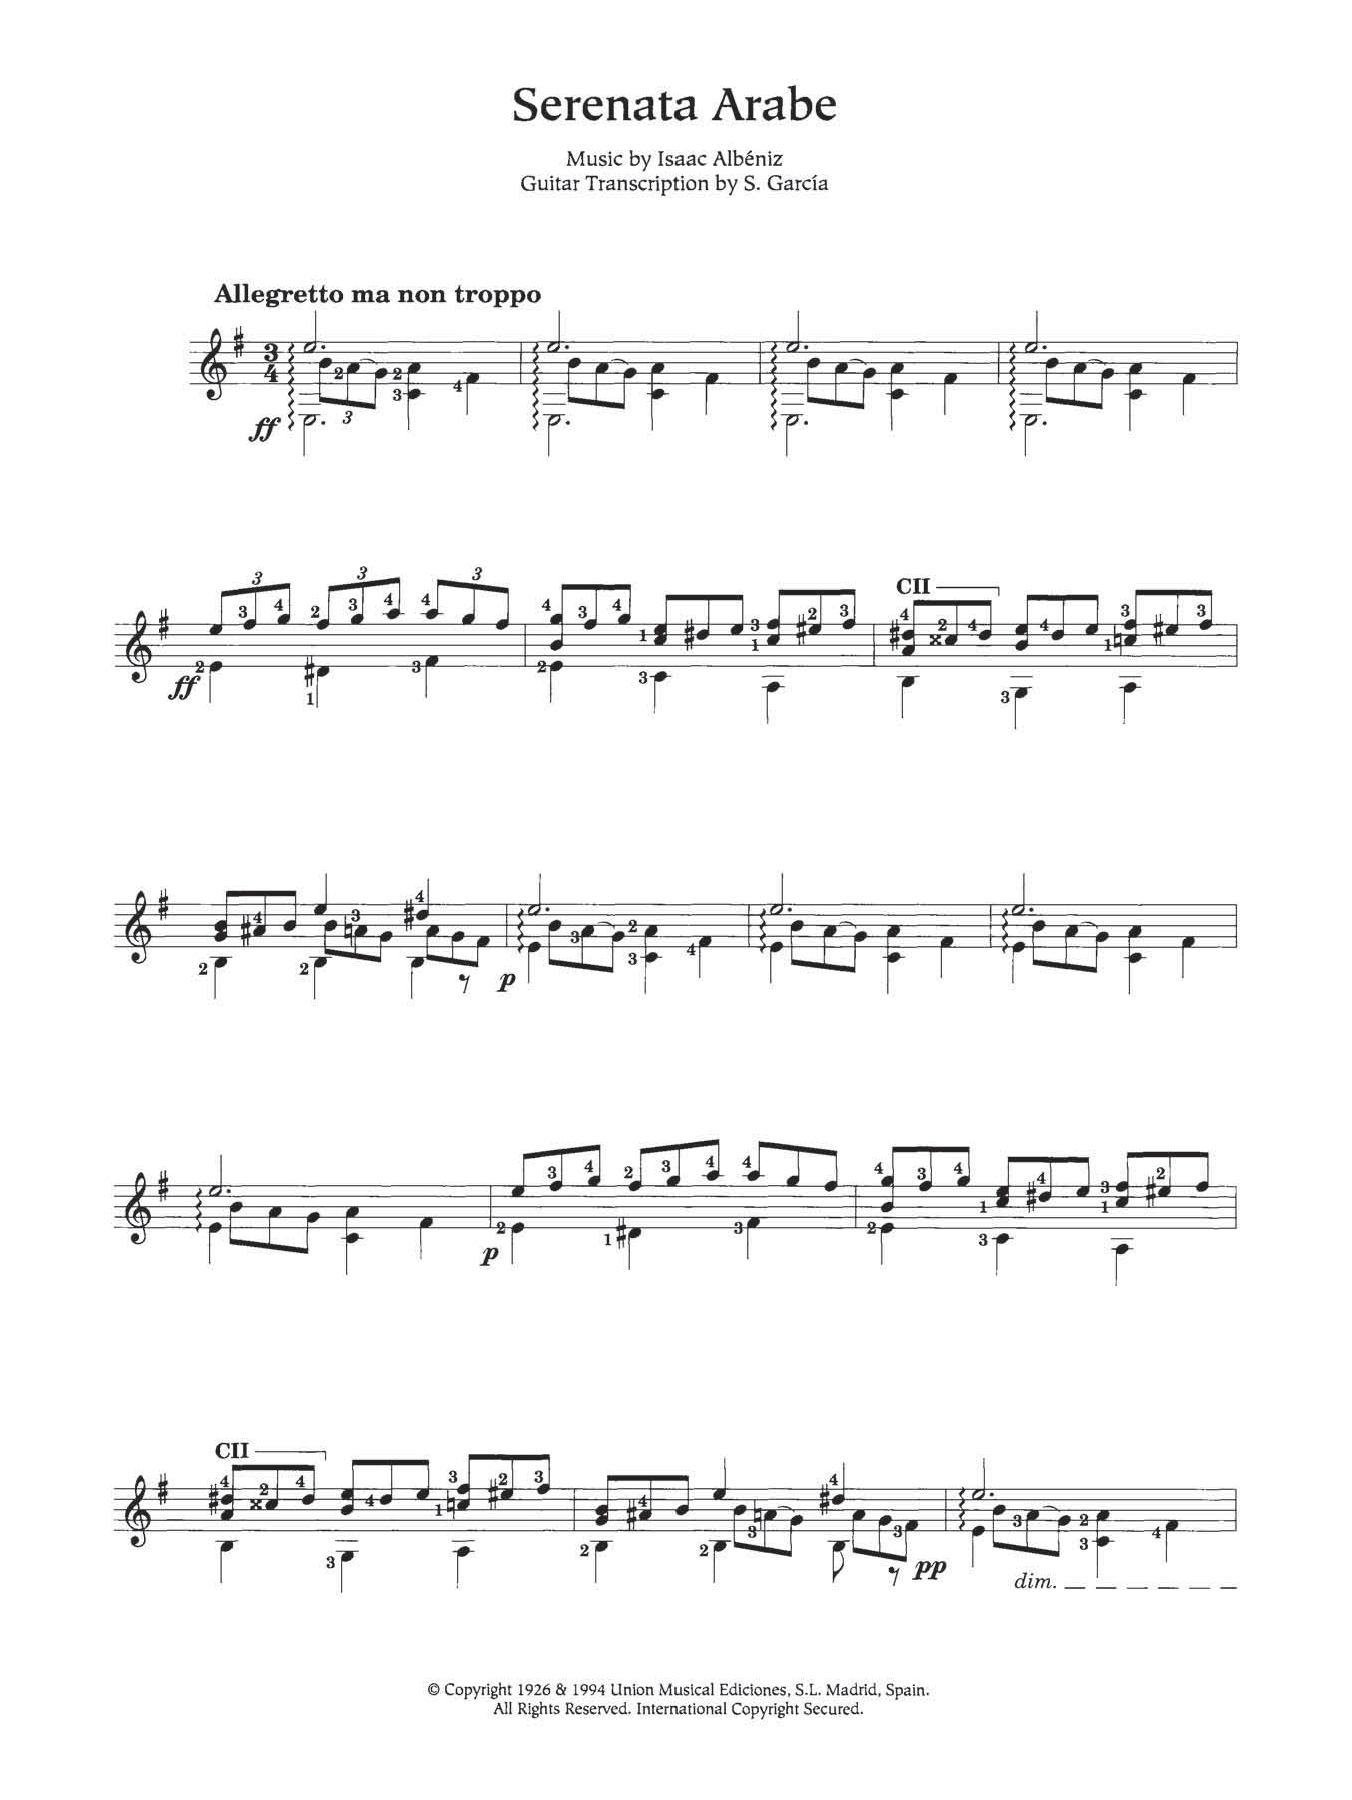 Isaac Albéniz Serenata Arabe Sheet Music Notes & Chords for Guitar - Download or Print PDF